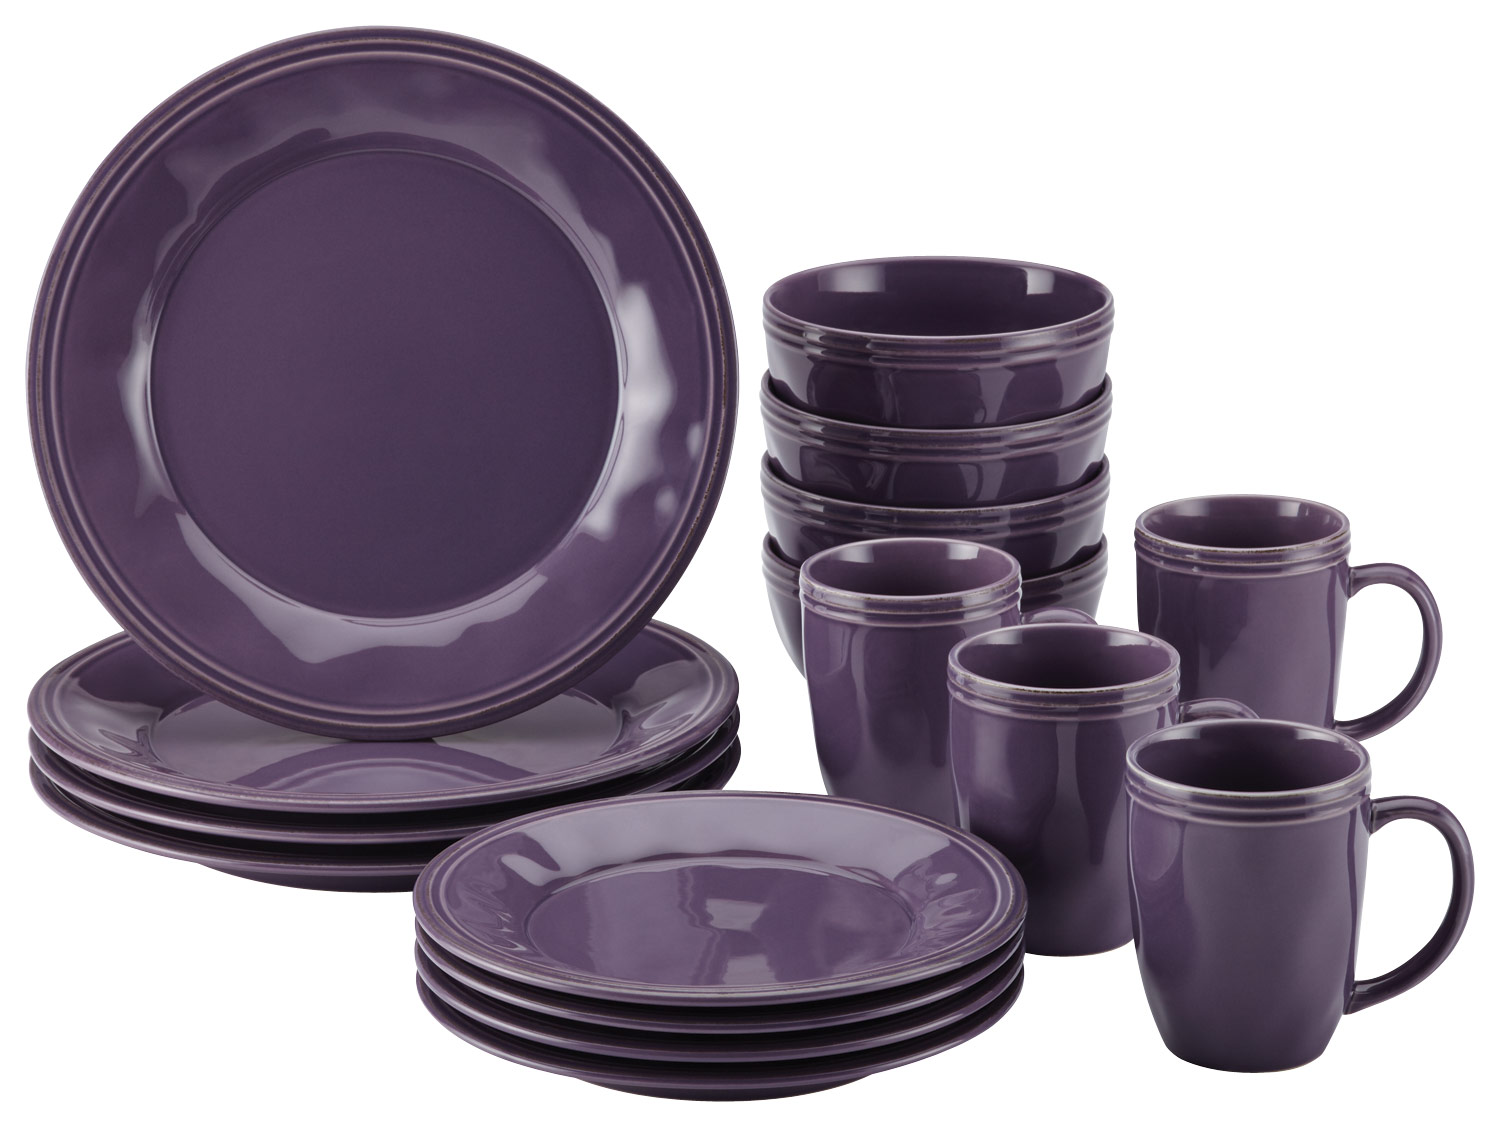 Rachael Ray - Cucina 16-Piece Dinnerware Set - Lavender Purple was $140.99 now $60.99 (57.0% off)